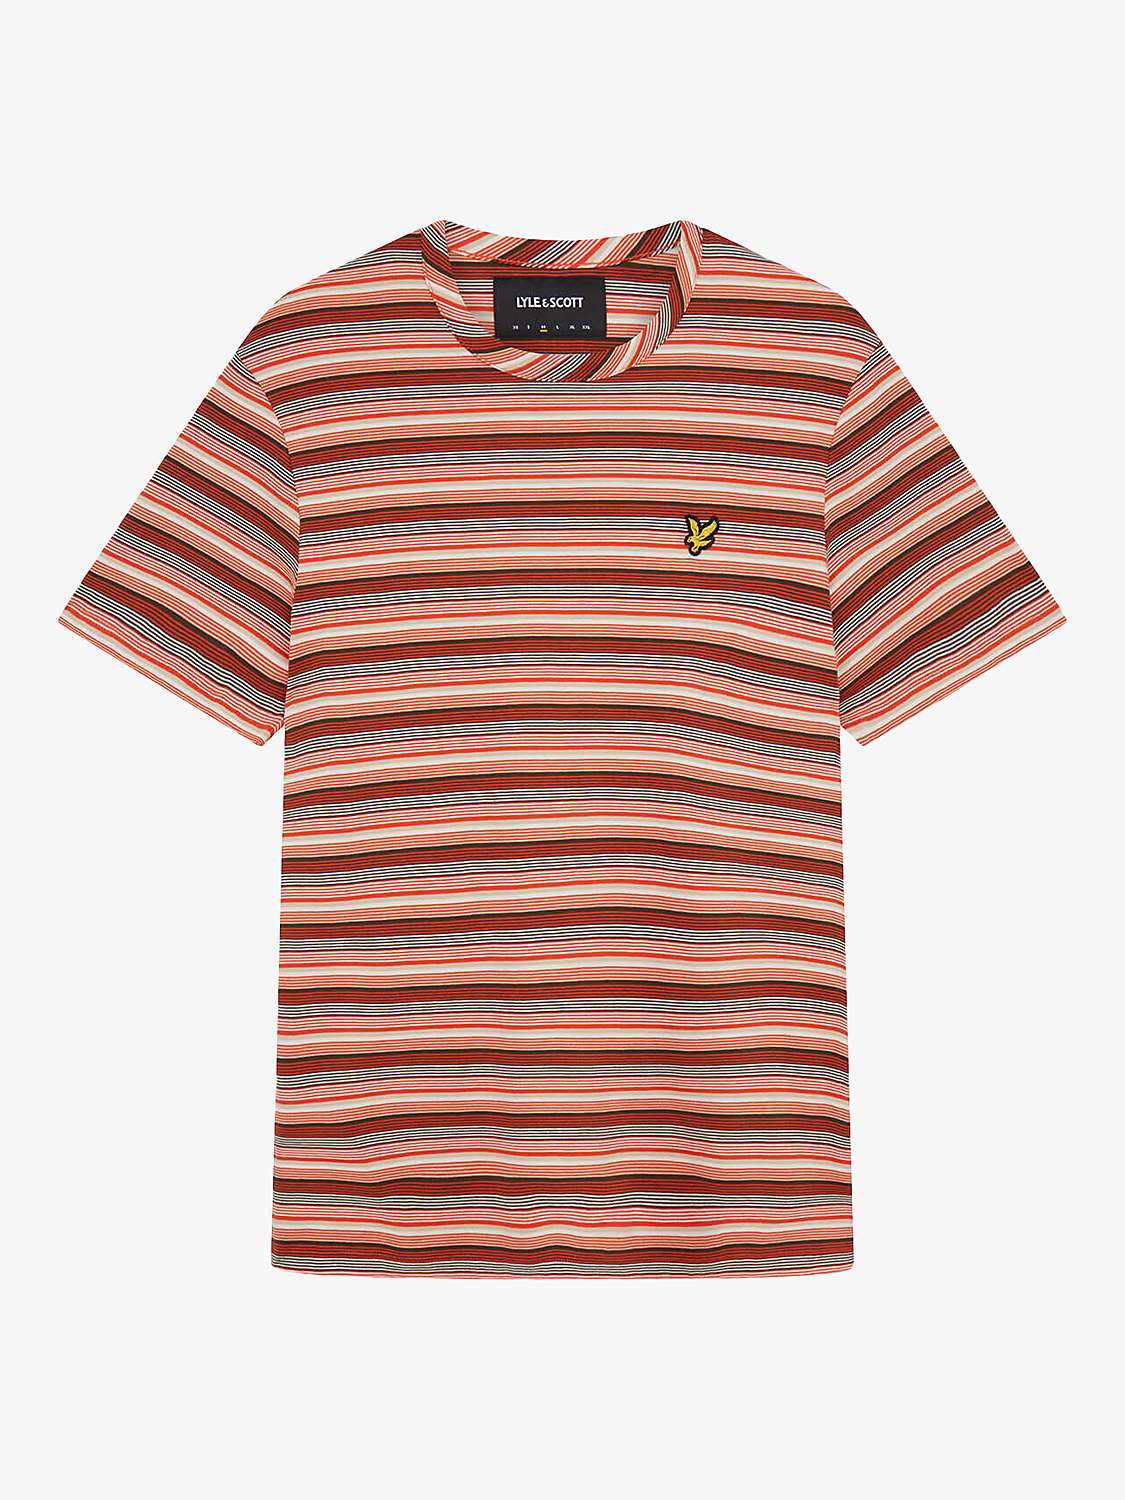 Lyle & Scott Multi Stripe T-Shirt, Burnt Orange at John Lewis & Partners